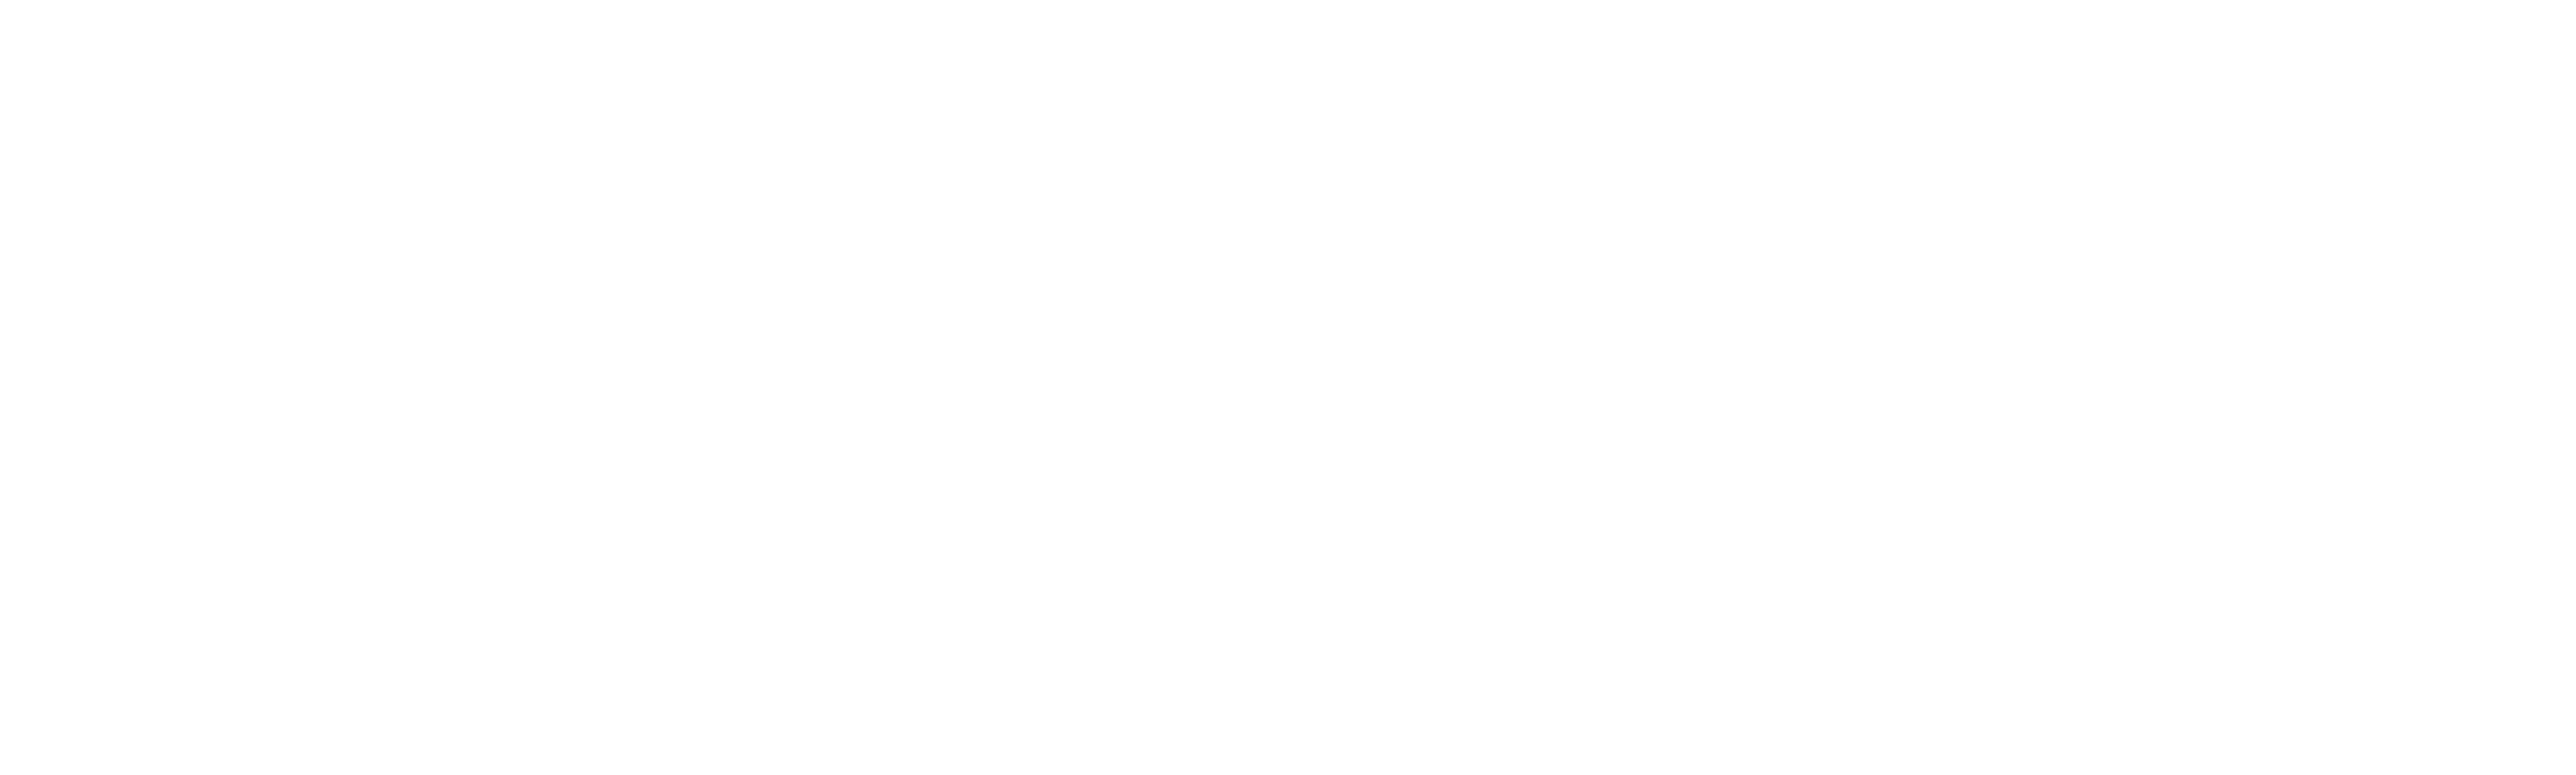 American Detective with Joe Kenda